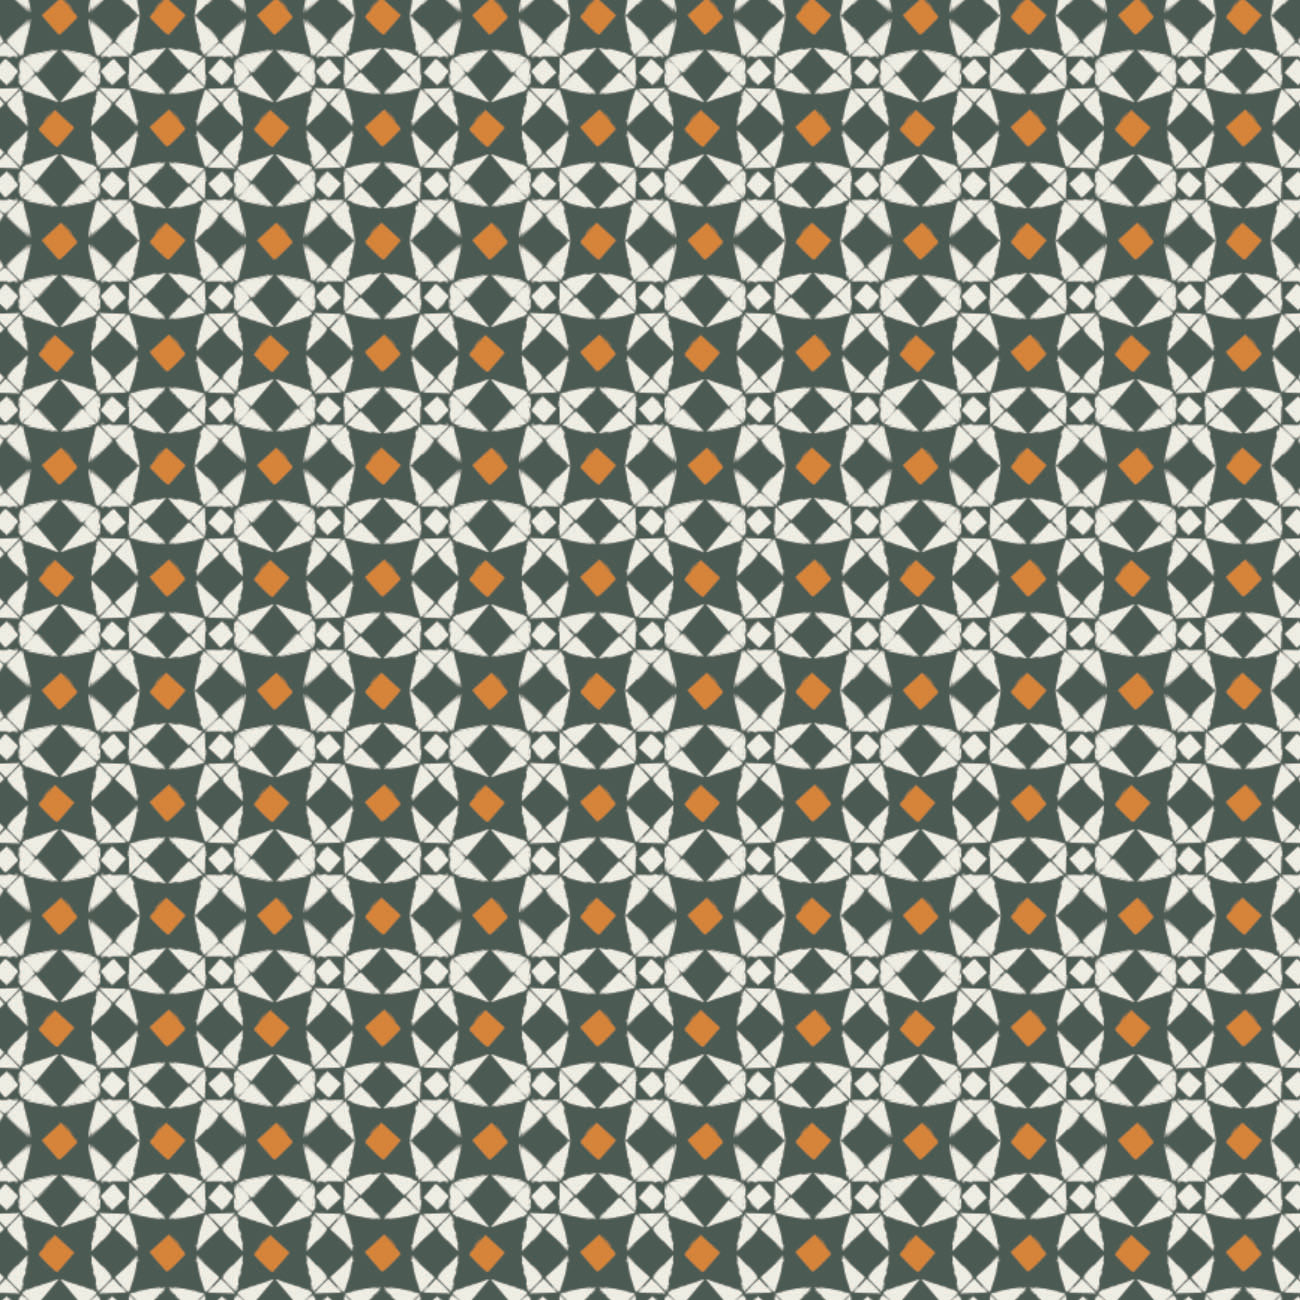 Tiles Cotton 2yd Precut Cotton - 30200505YC2AMZ2 - 02 Dark Green